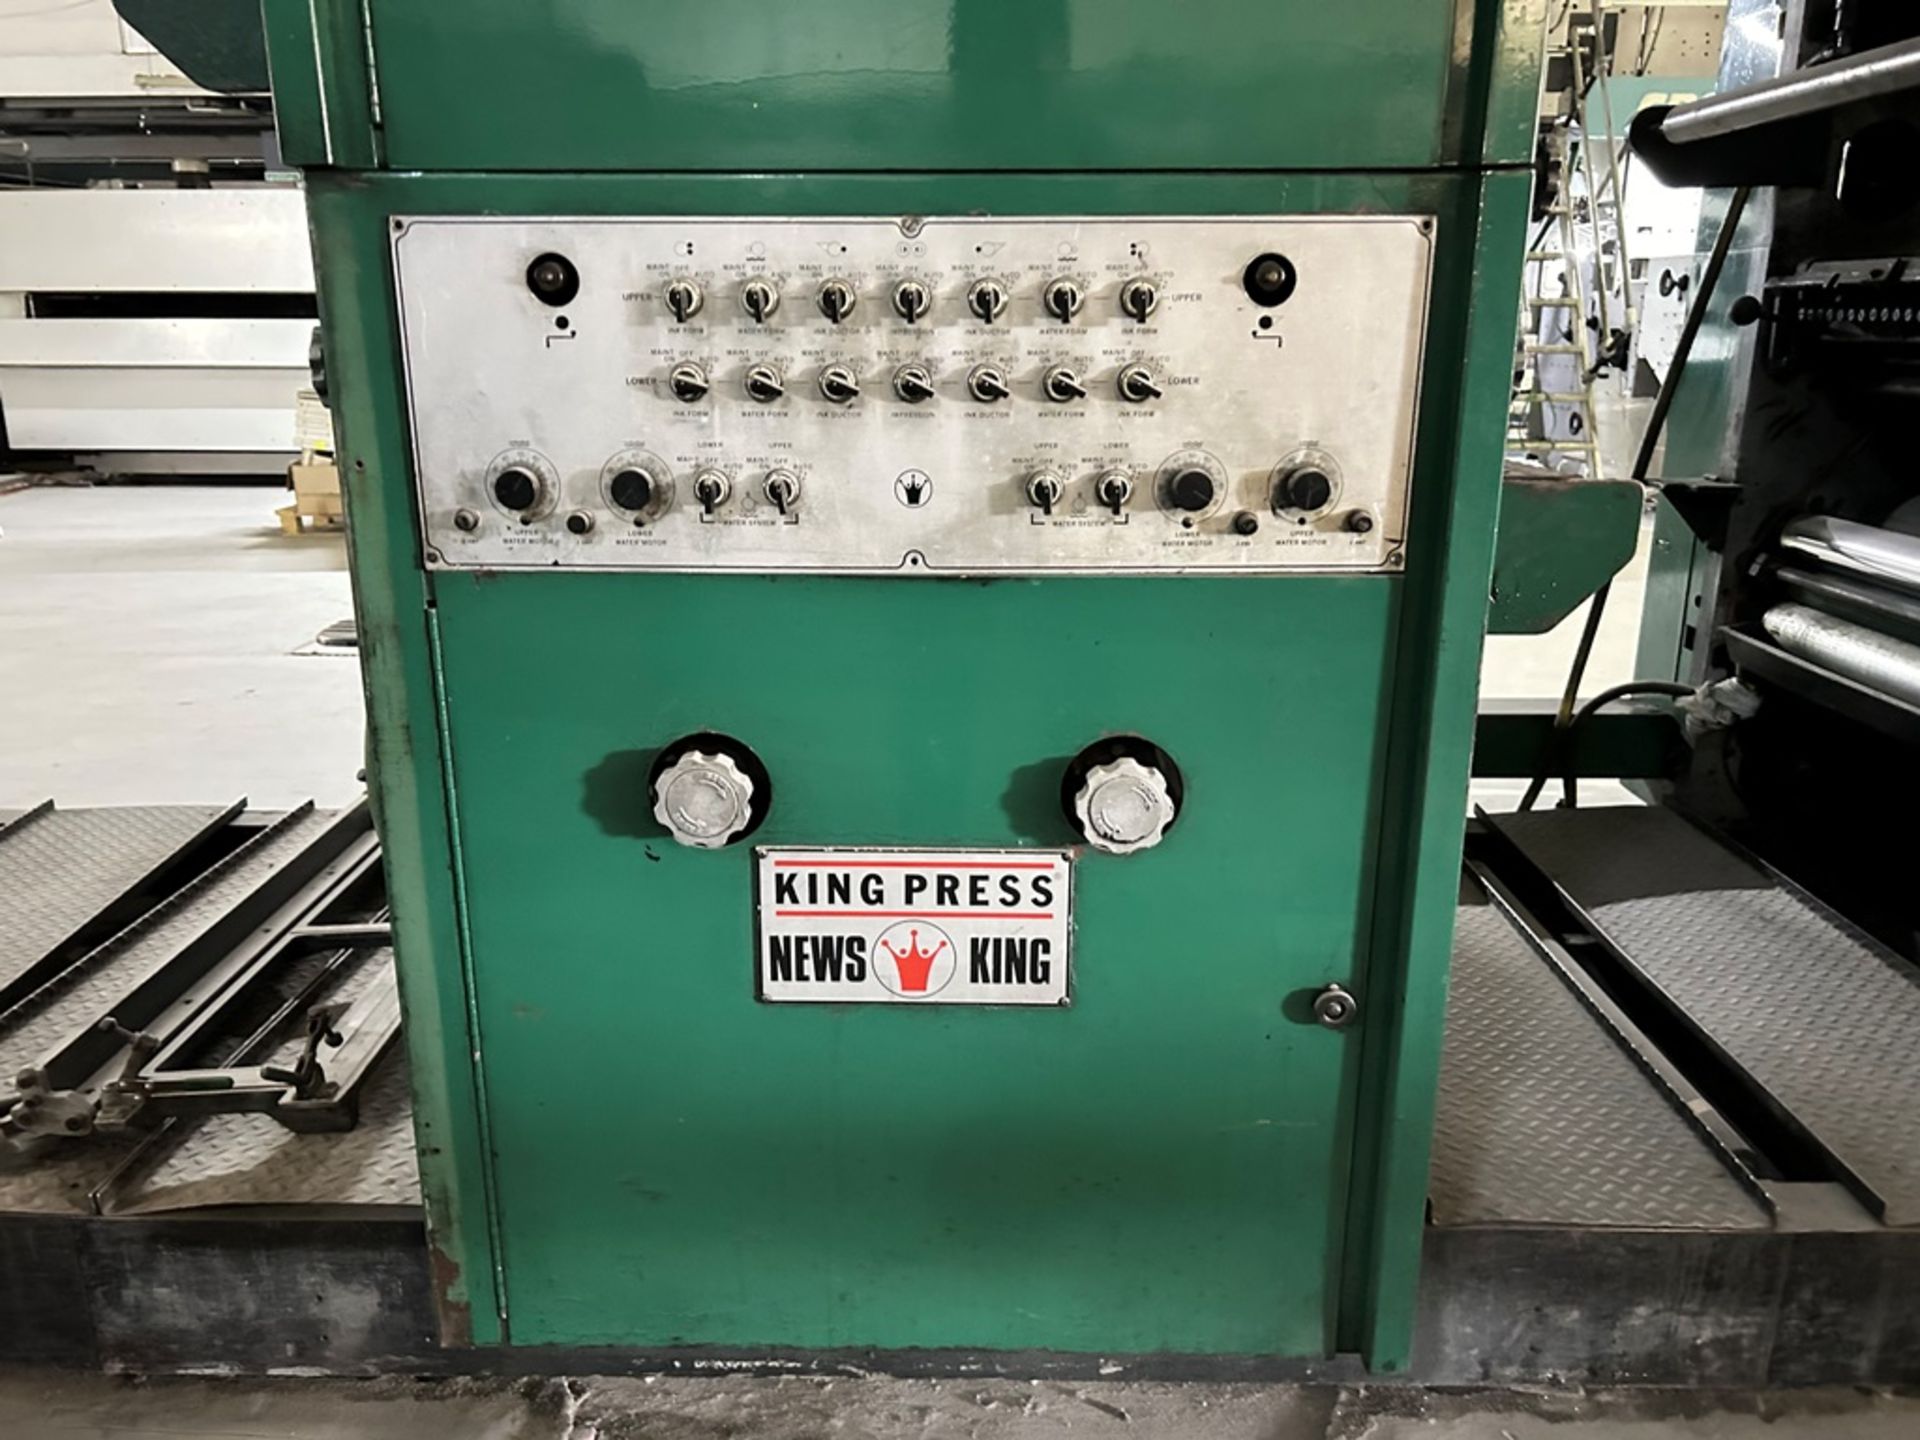 NEWS KING rotary printing machine, Model KING PRESS KJ8, Serial No. P2680-1.F21C2-9-89 CM-1000, Yea - Image 12 of 14